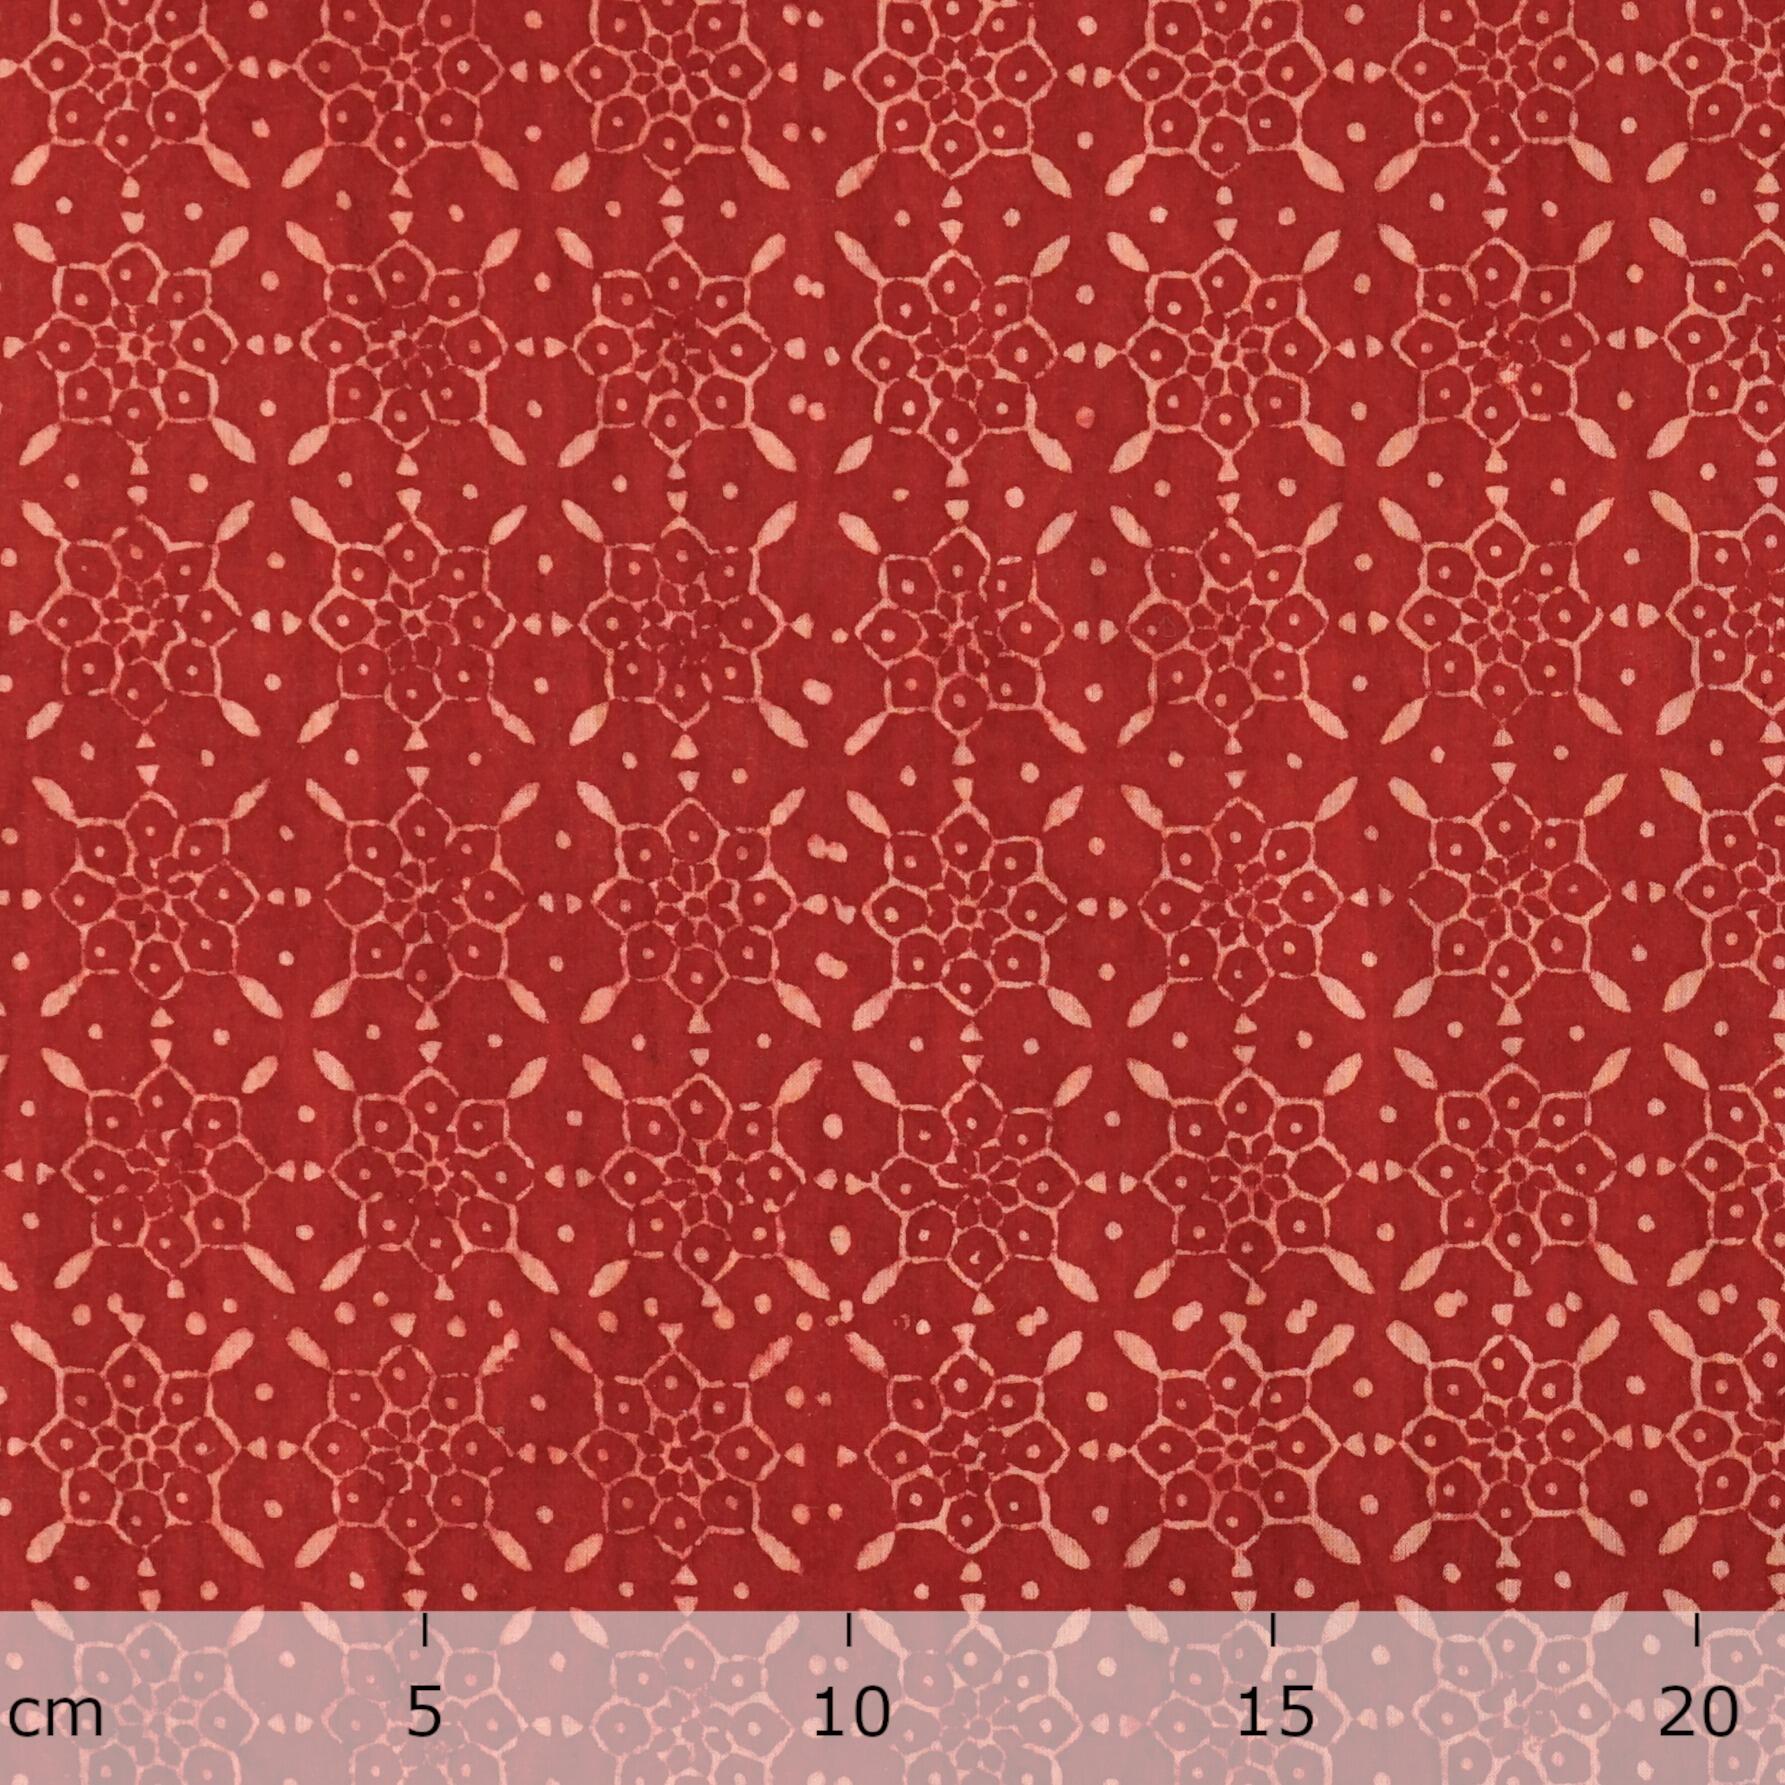 3 - AHM53 - Block-Printed Cotton Fabric - Alizarin Dye - Red - Pangs Motif - Ruler